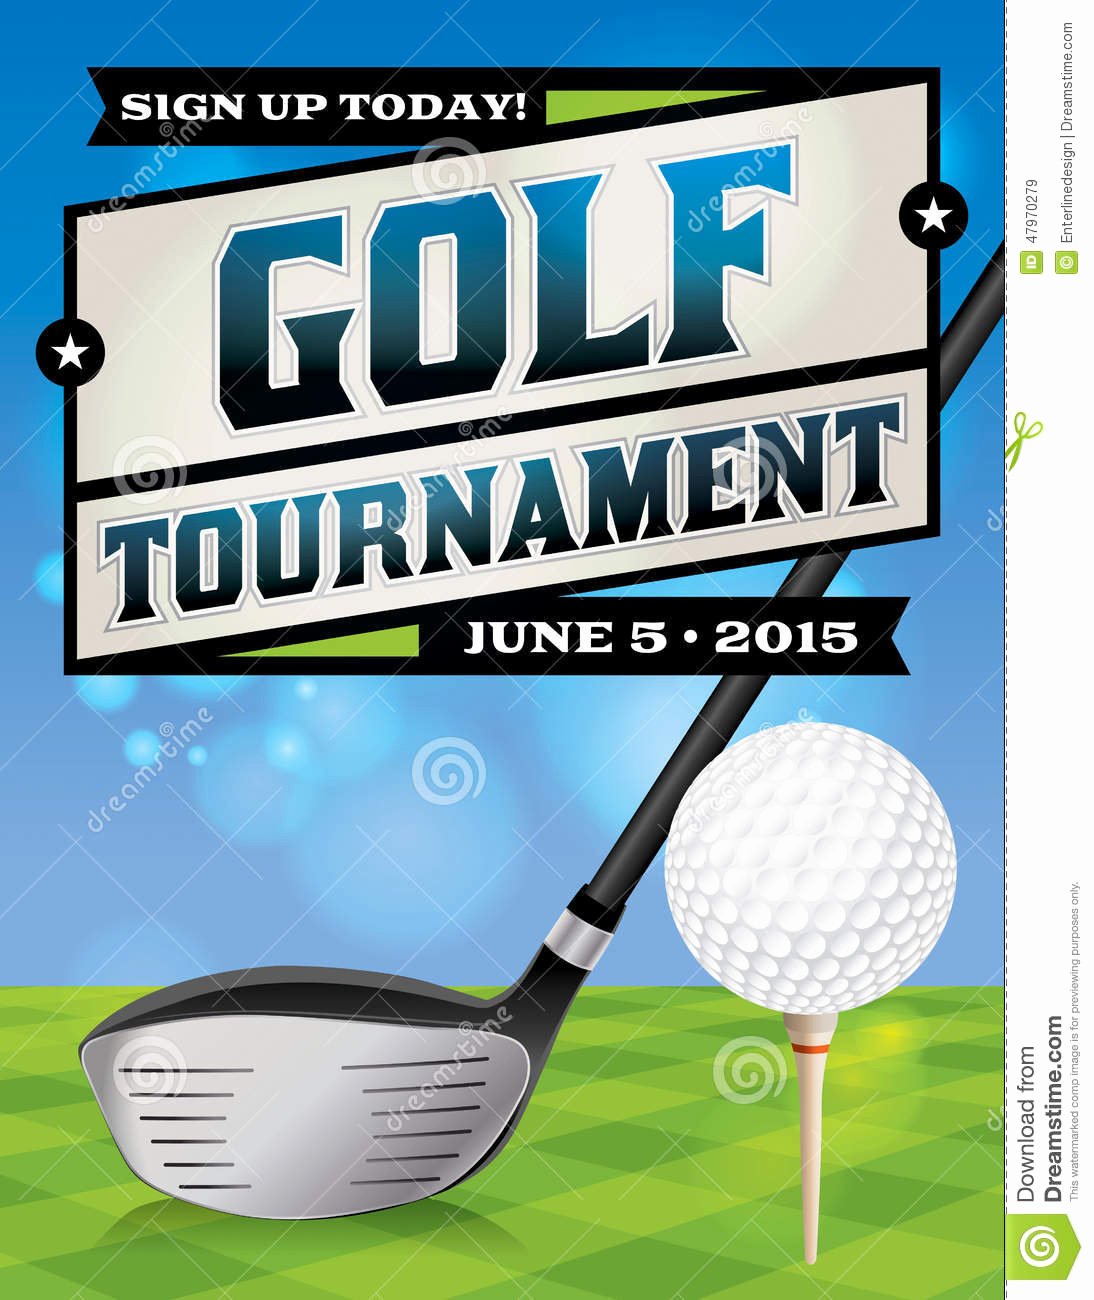 Golf tournament Flyer Illustration Stock Vector Image